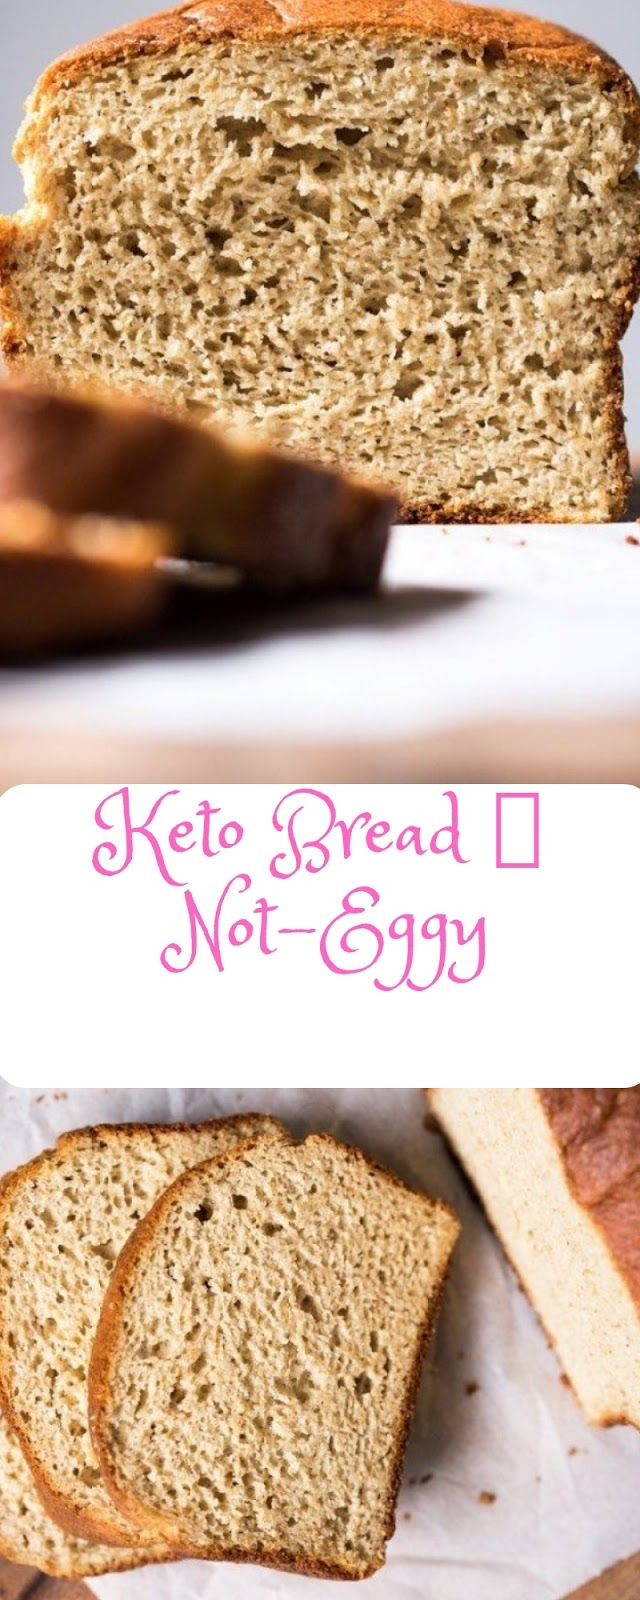 Not Eggy Keto Sandwich Bread
 Keto Bread Not Eggy Kitchen Stronger